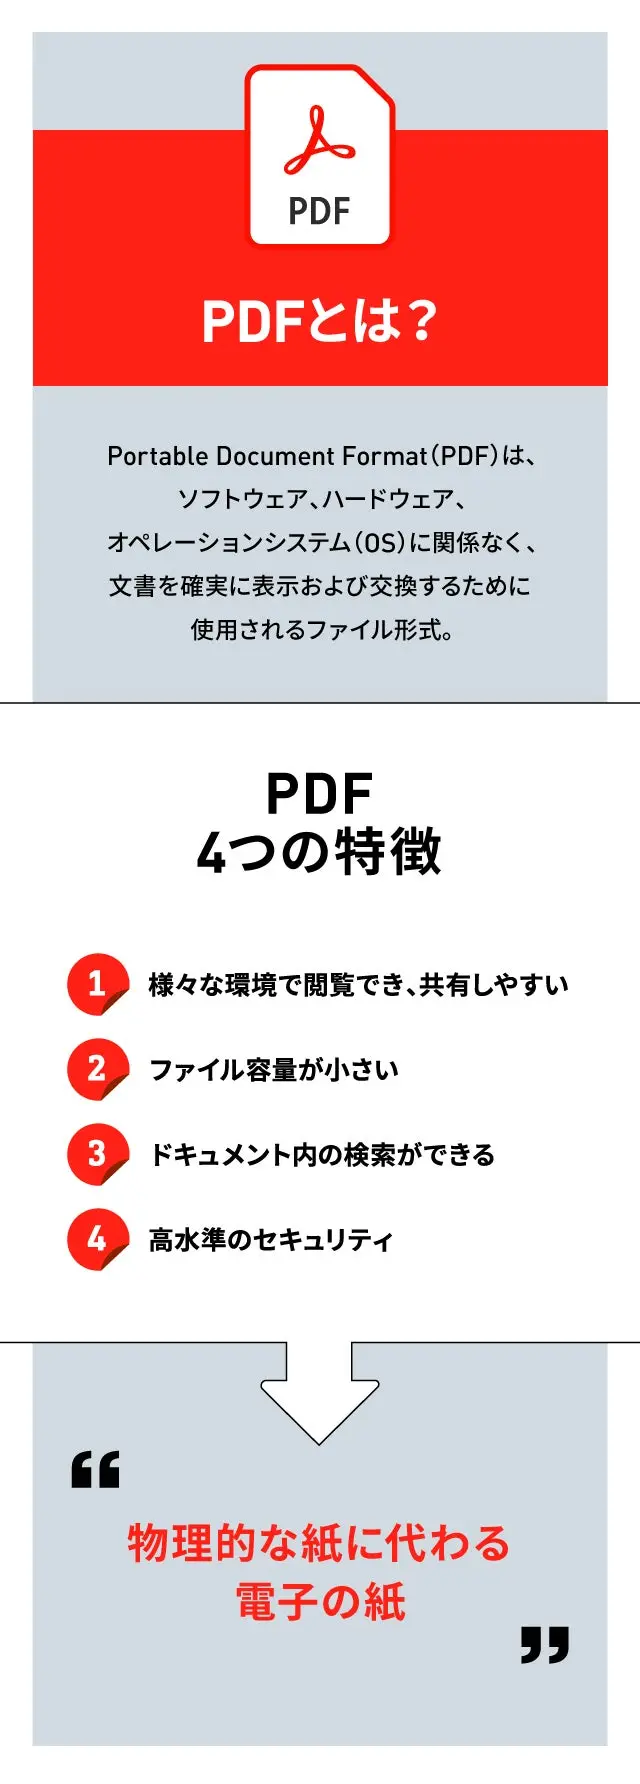 PDF４つの特徴